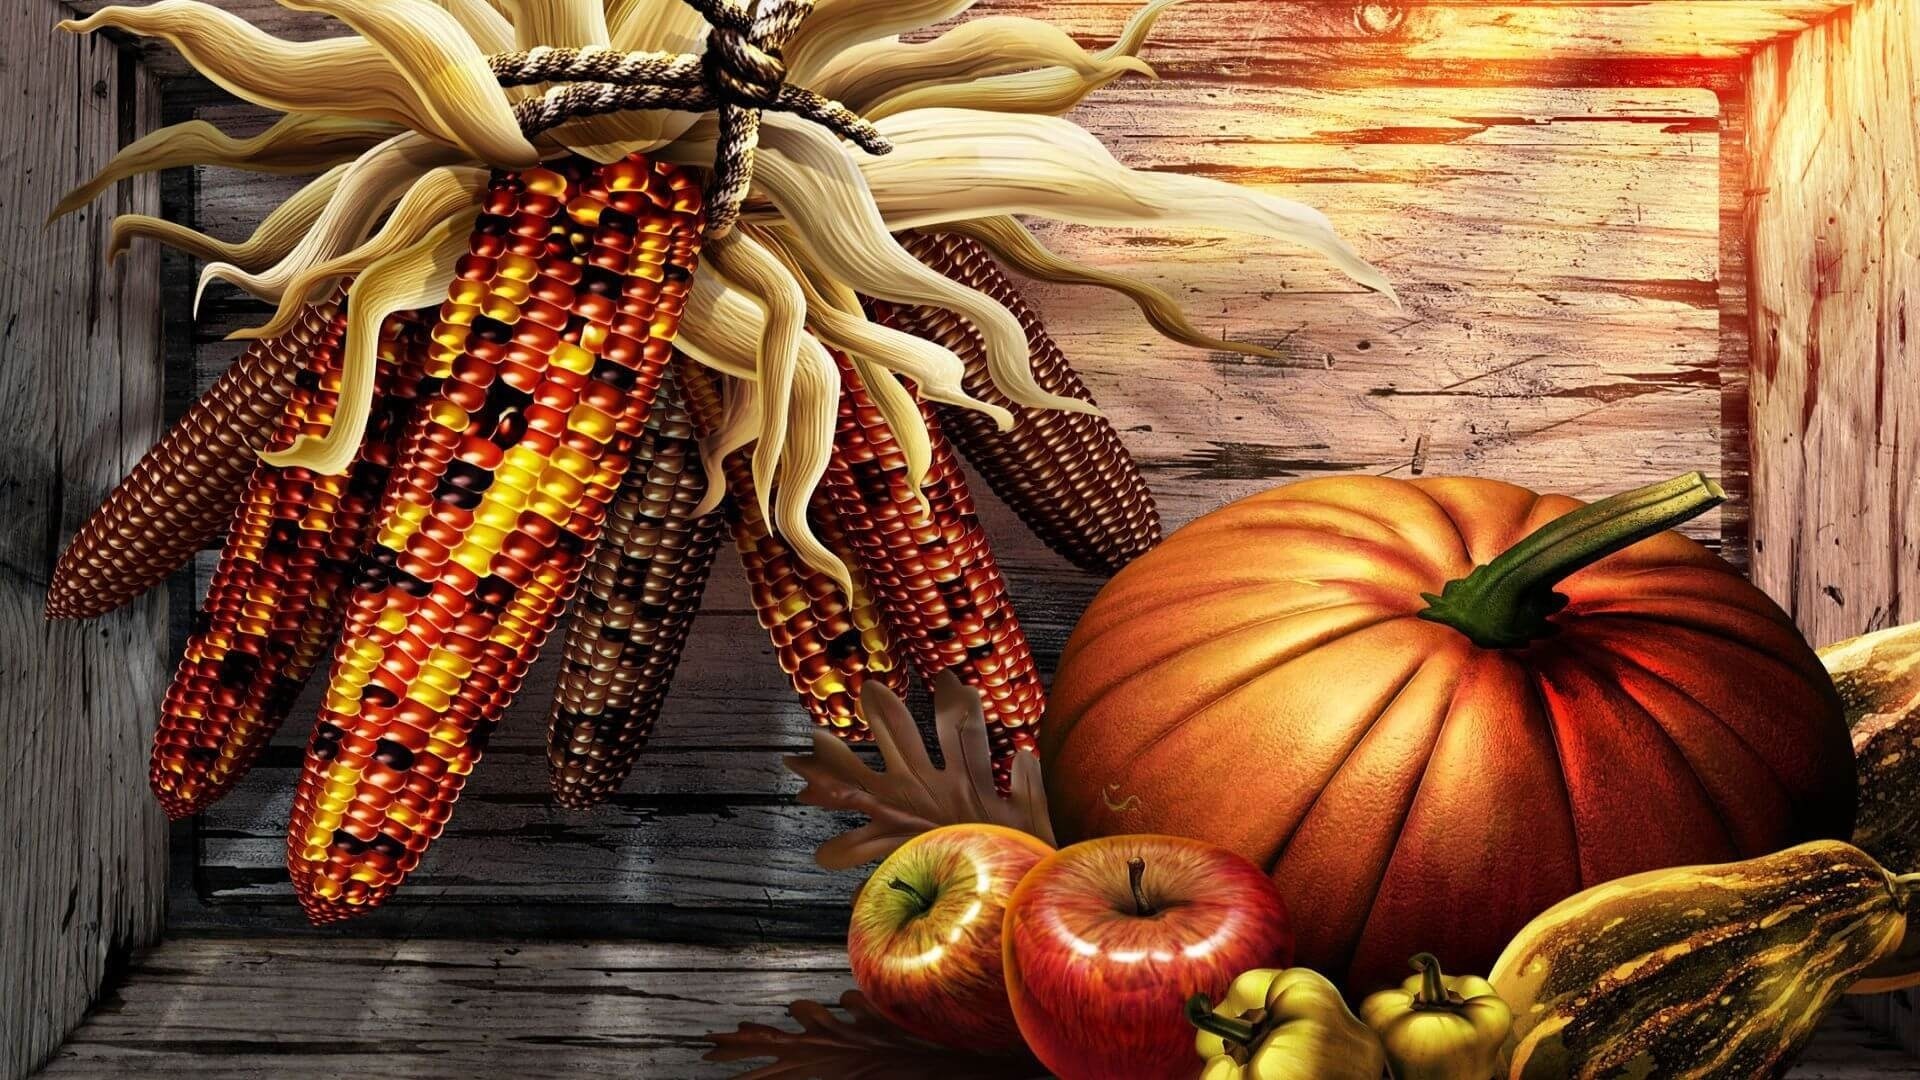 Thanksgiving Wallpaper